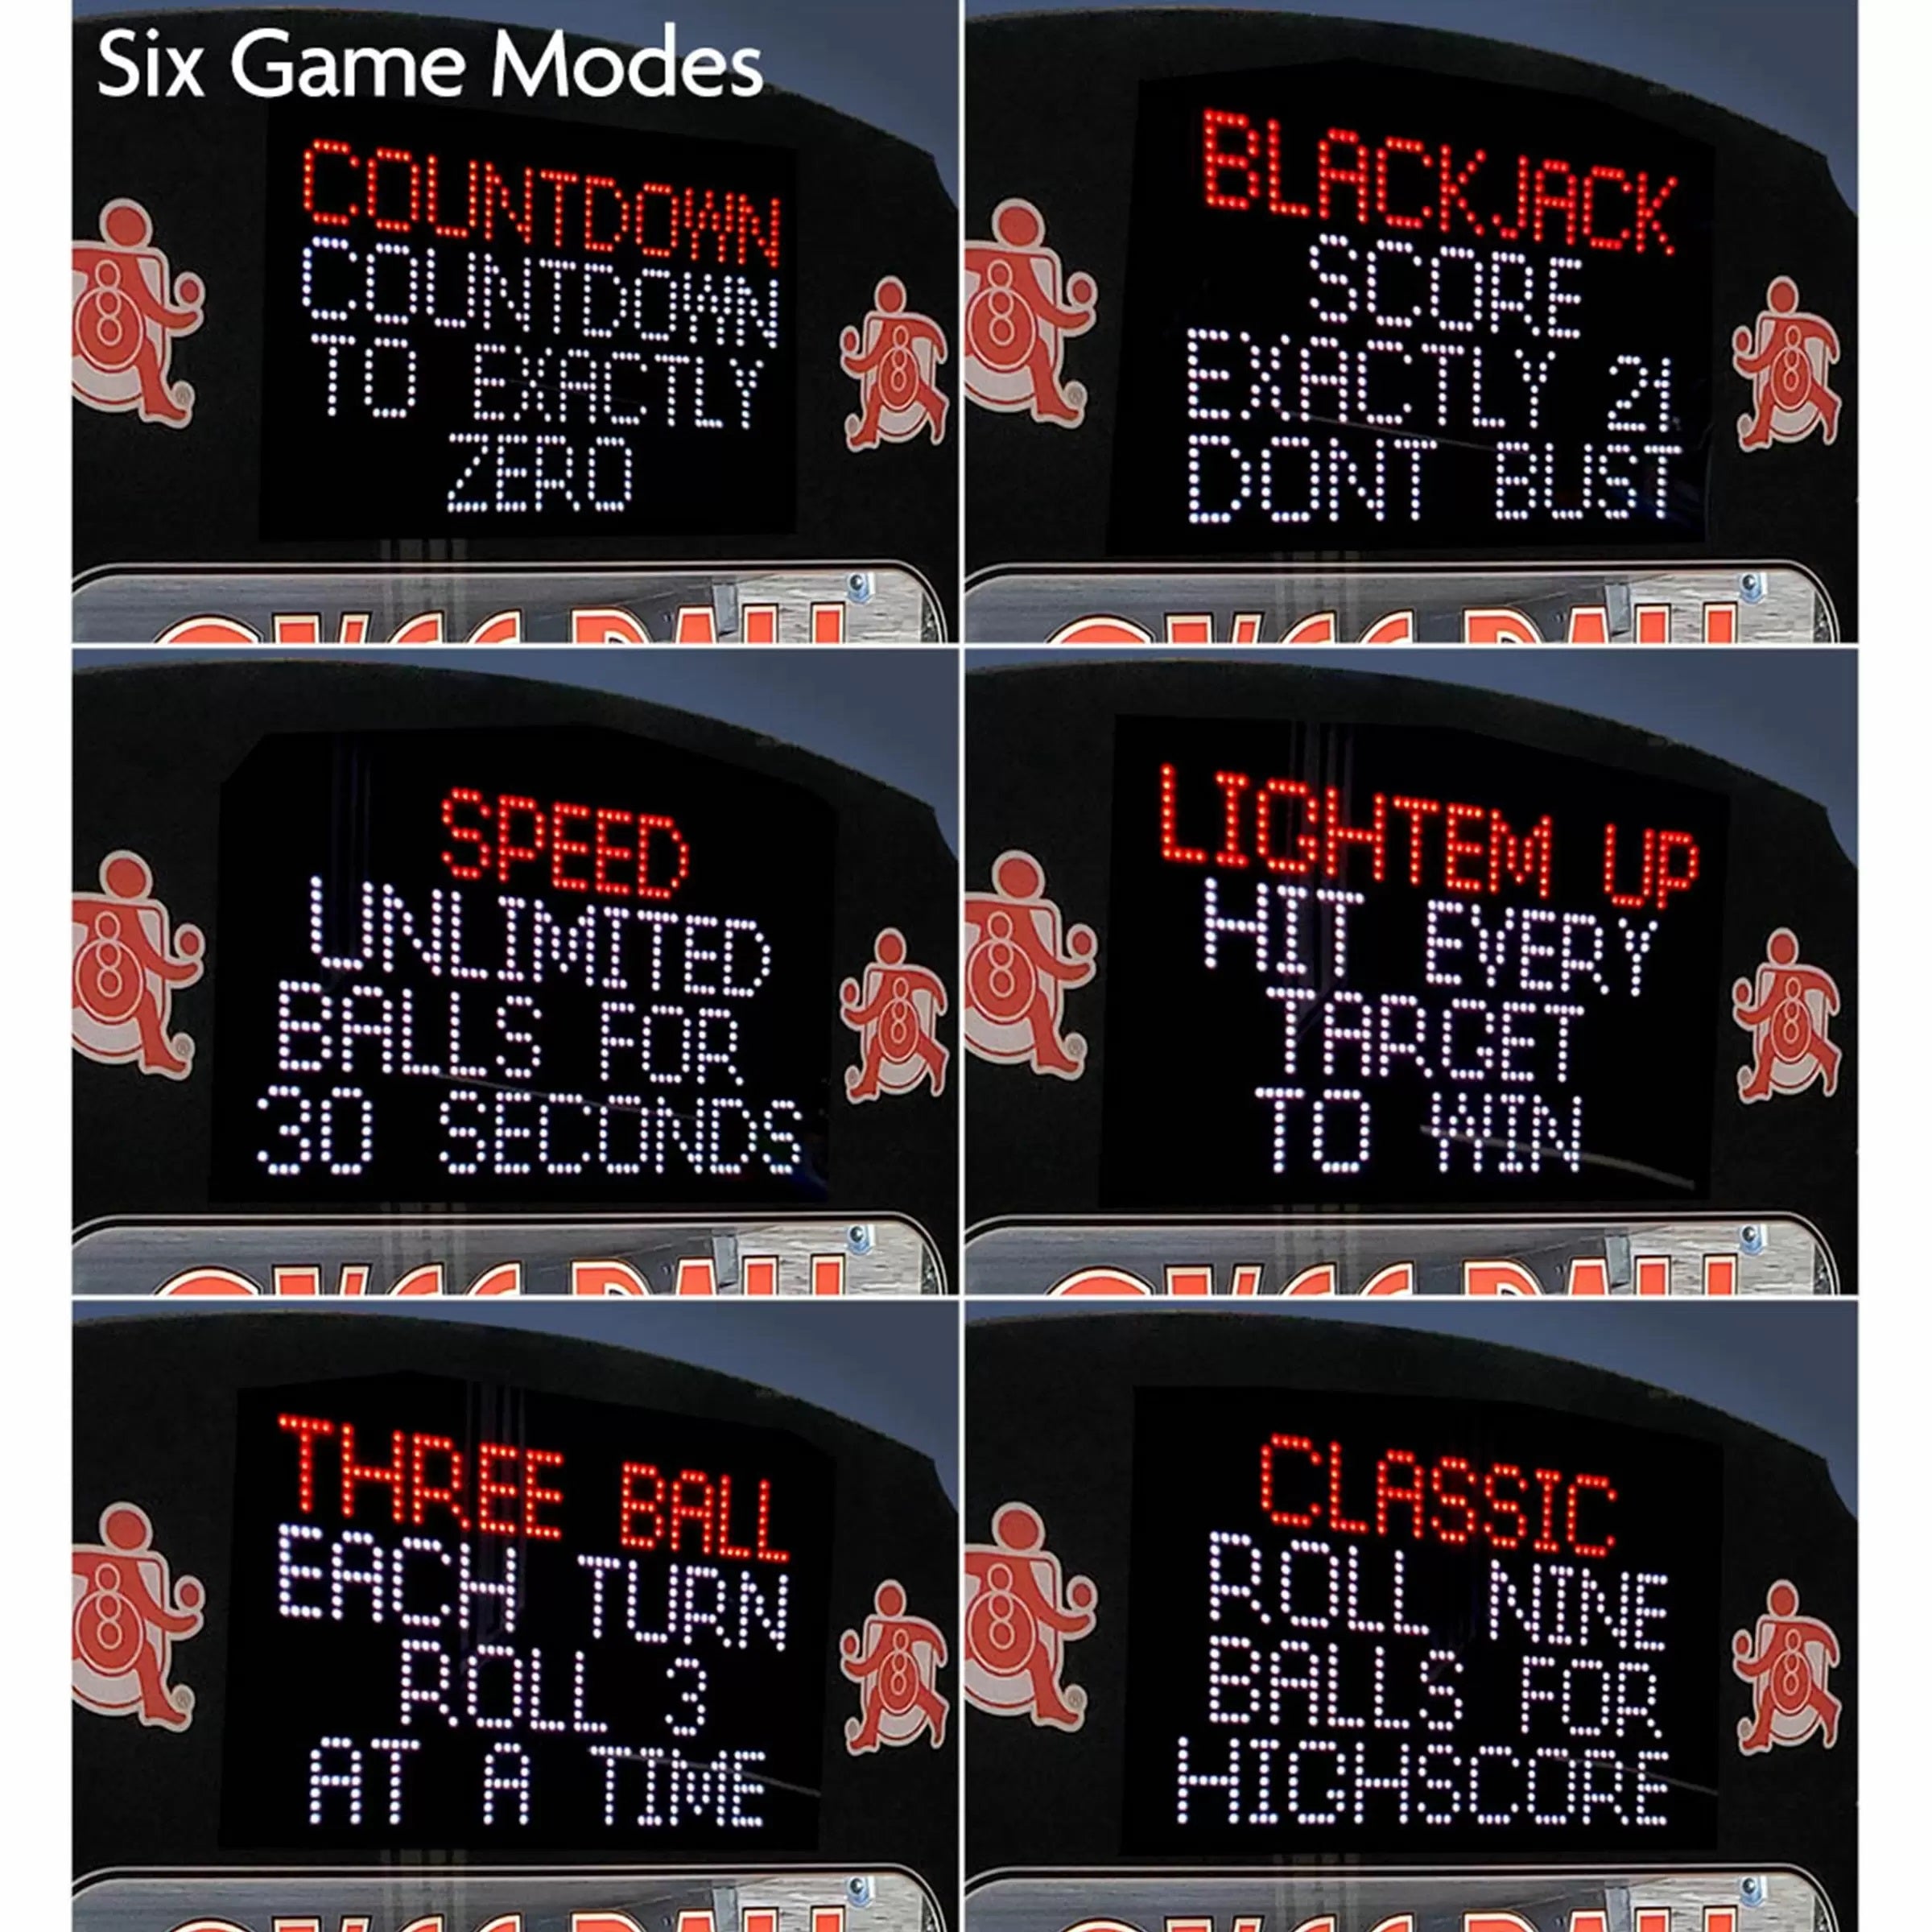 Imperial USA Home Arcade Premium Skee Ball Game Modes